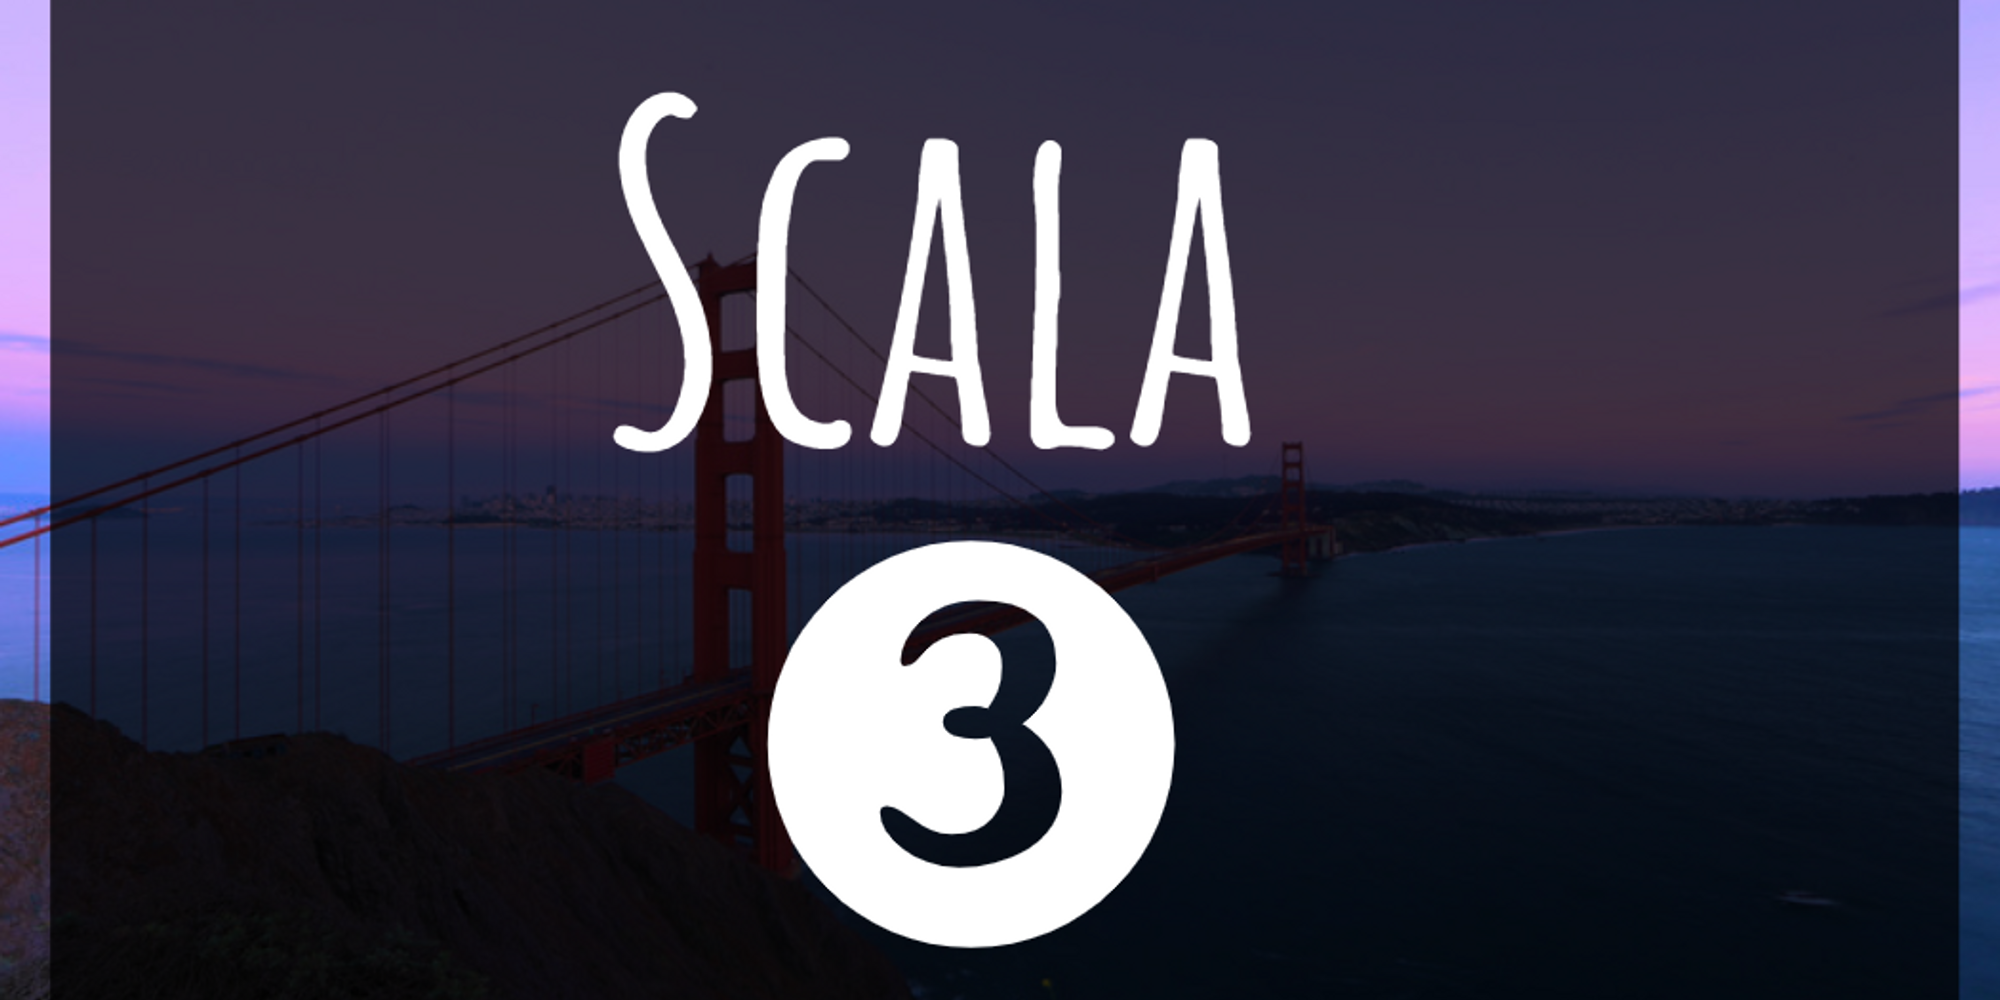 Scala3